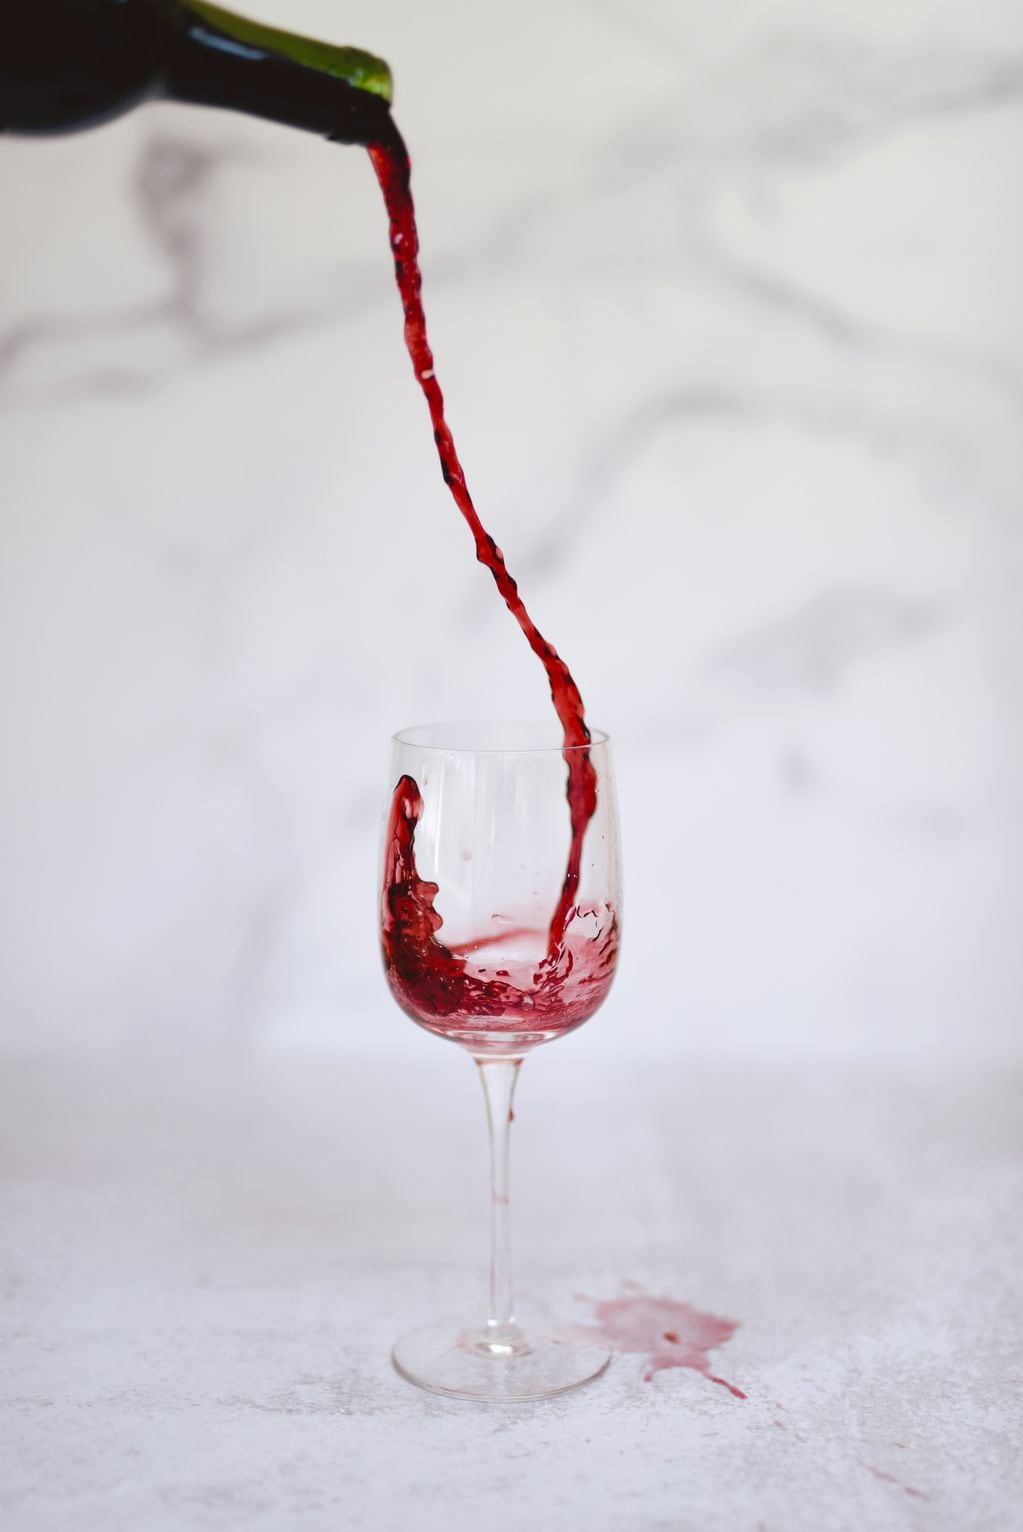 Mancha de vino, imagen ilustrativa.